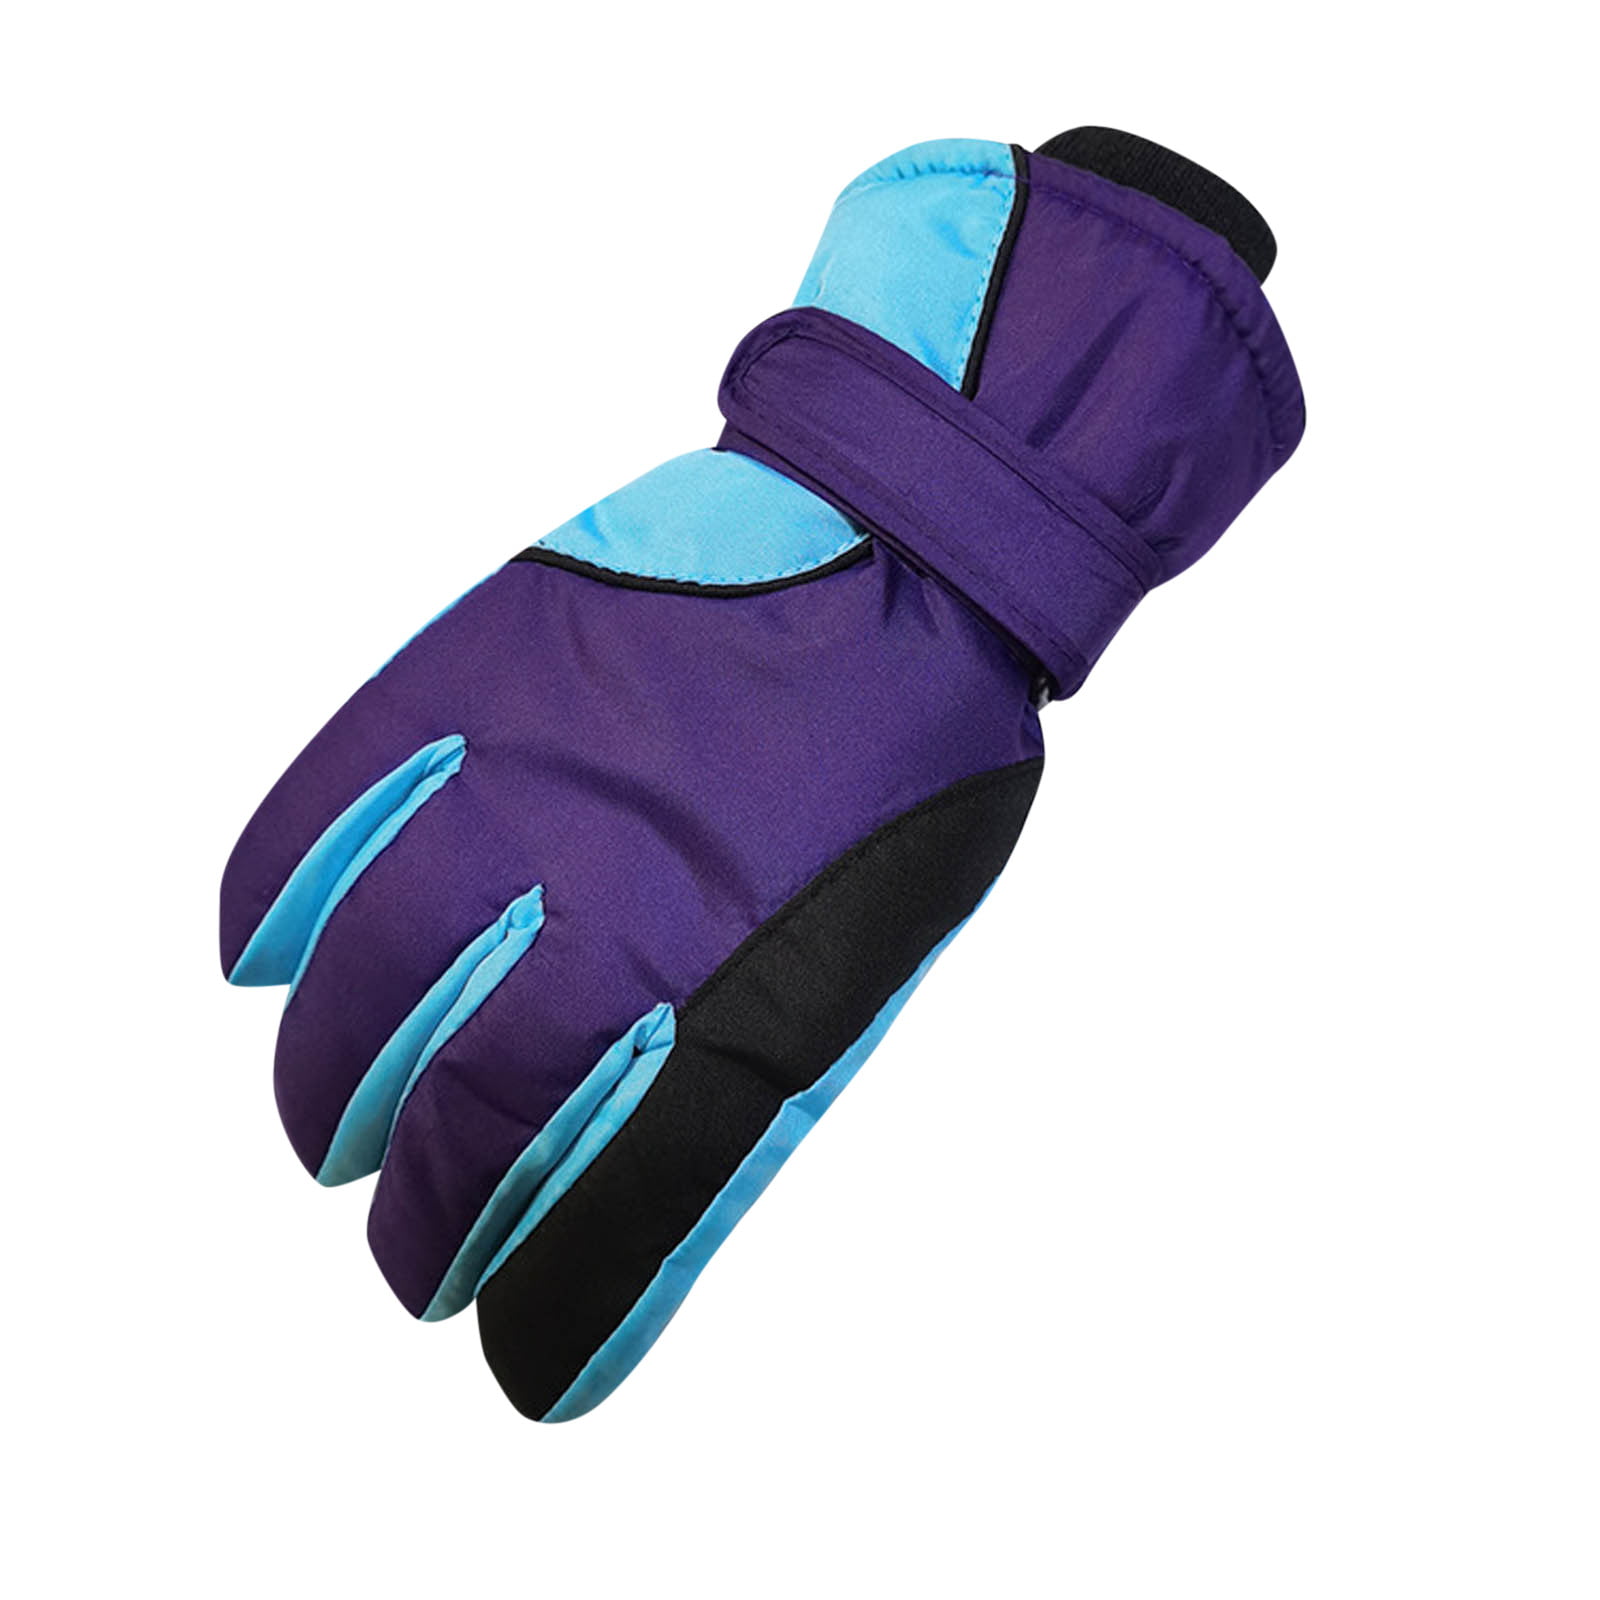 Unisex Winter Windproof Gloves Warm Outdoor Driving Mountain Climbing Sports Gloves Mittens